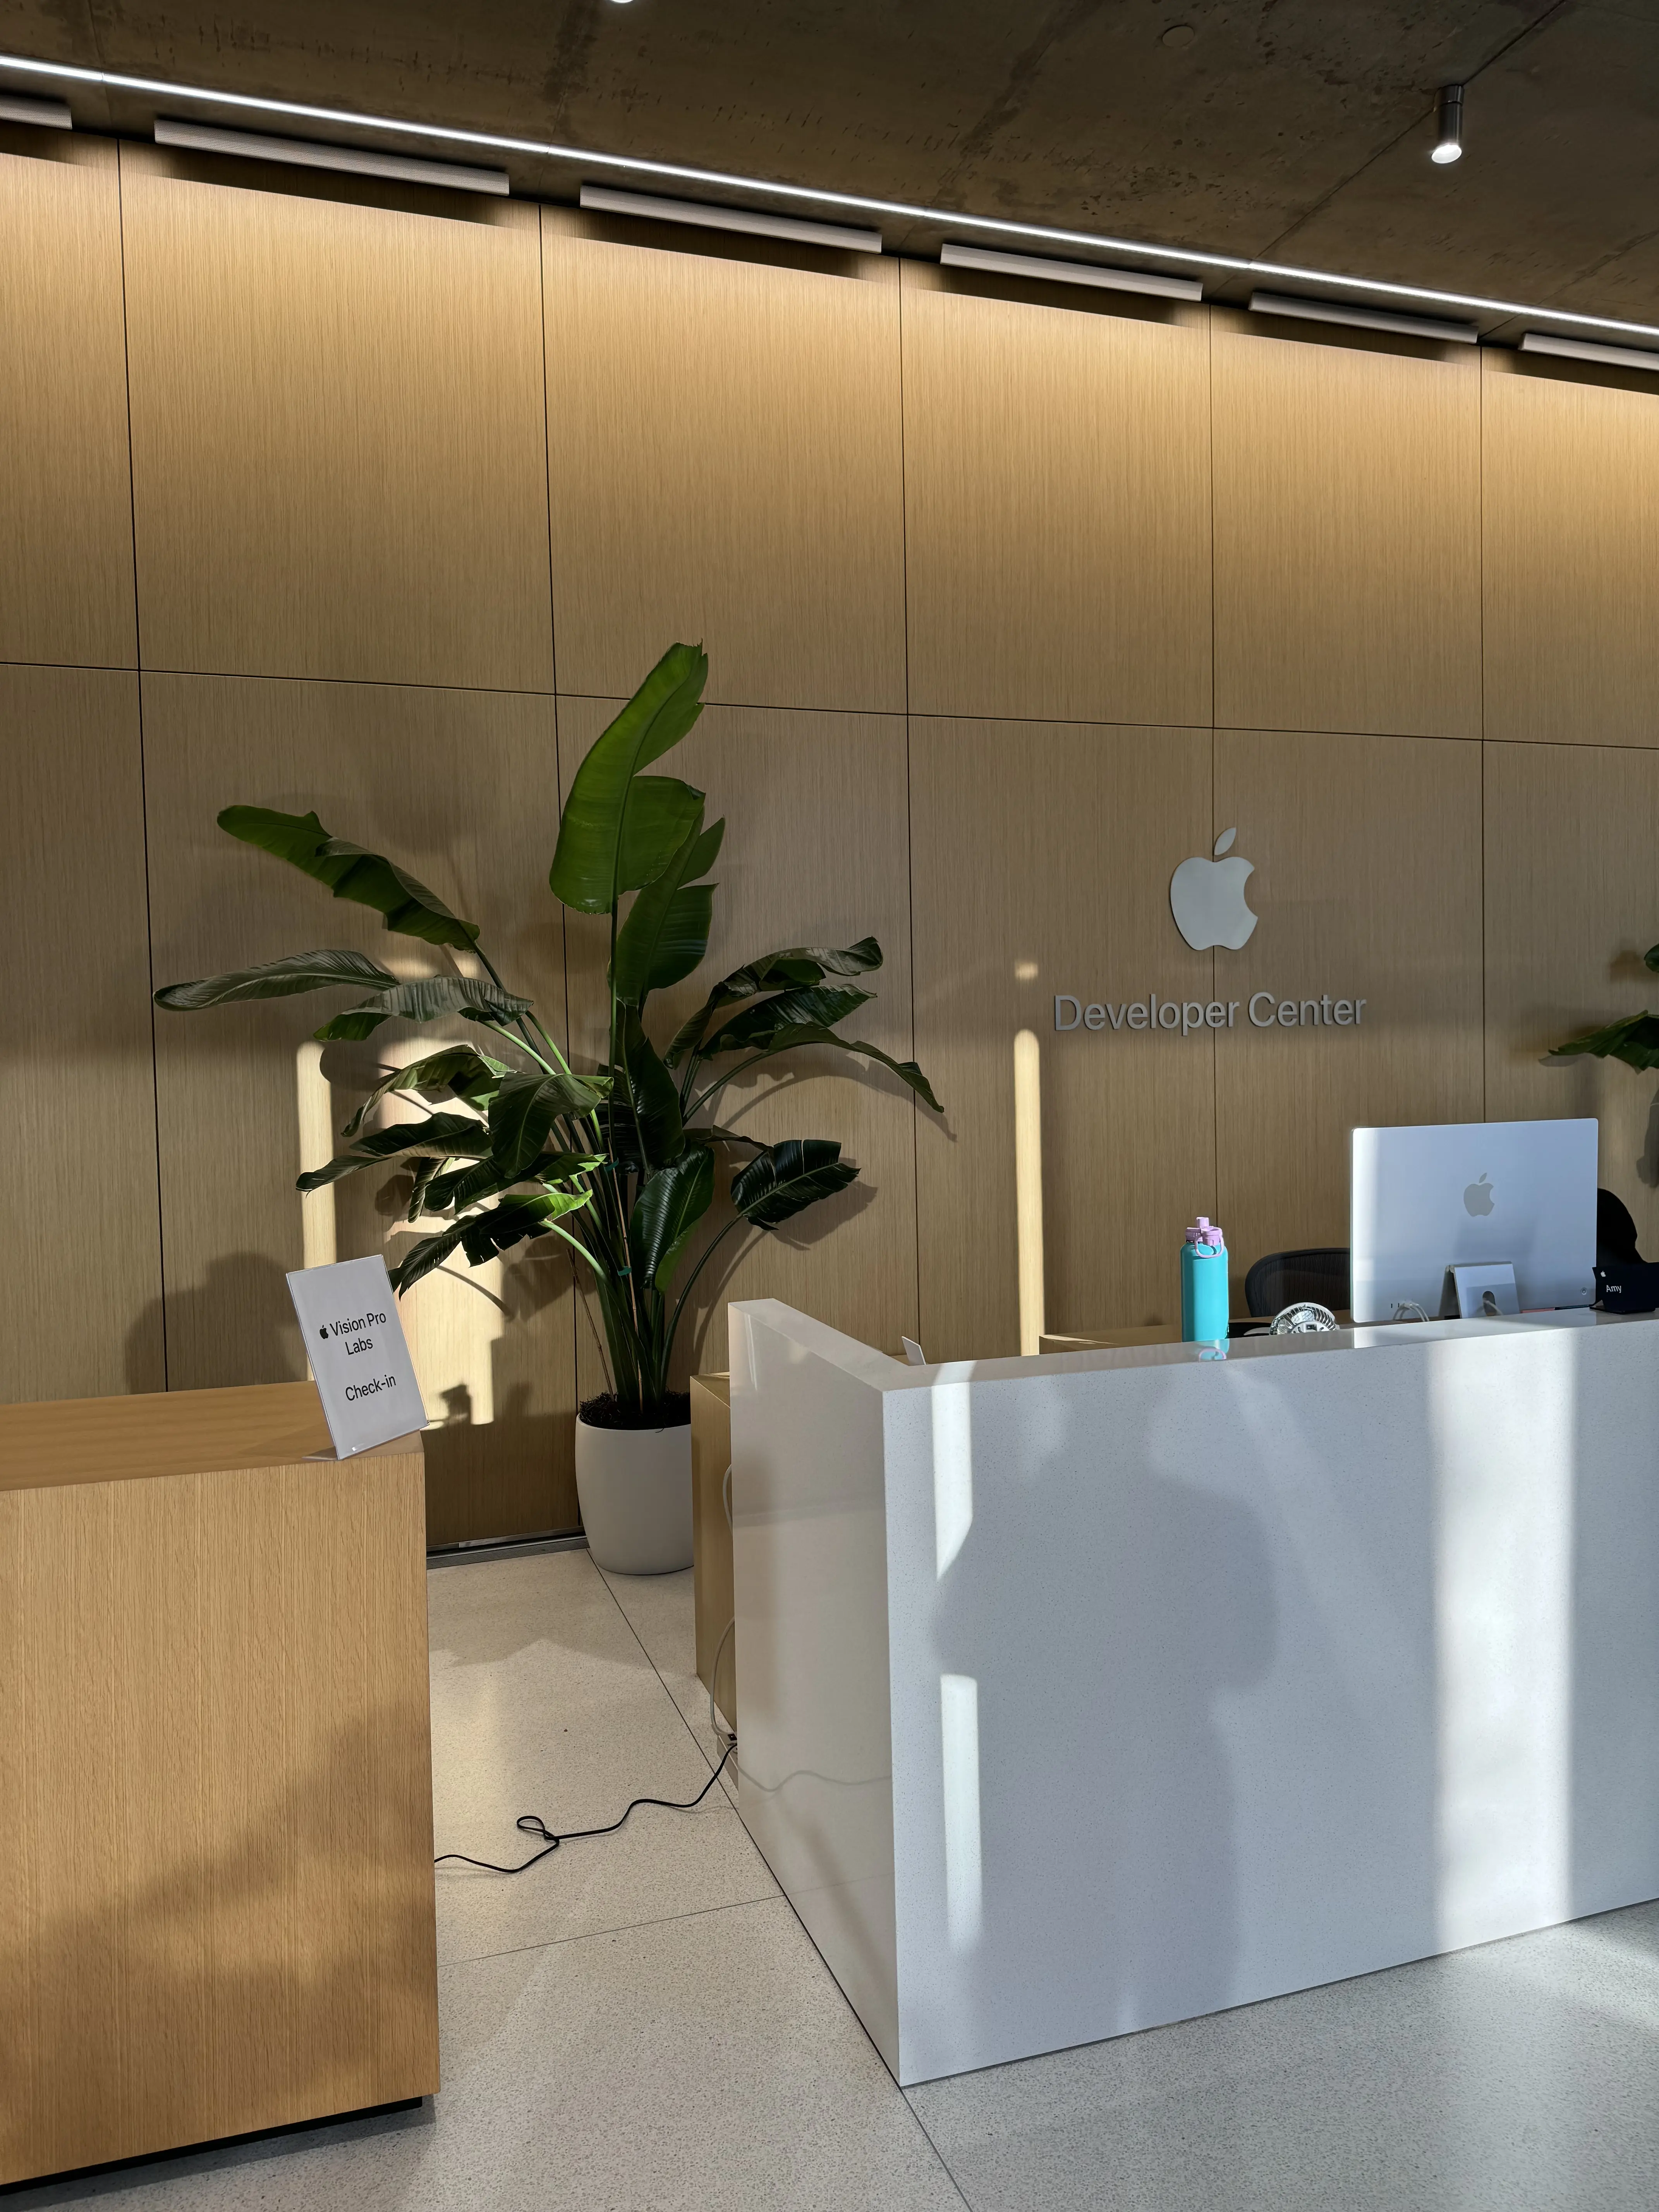 Apple's Developer Center Lobby in Cupertino